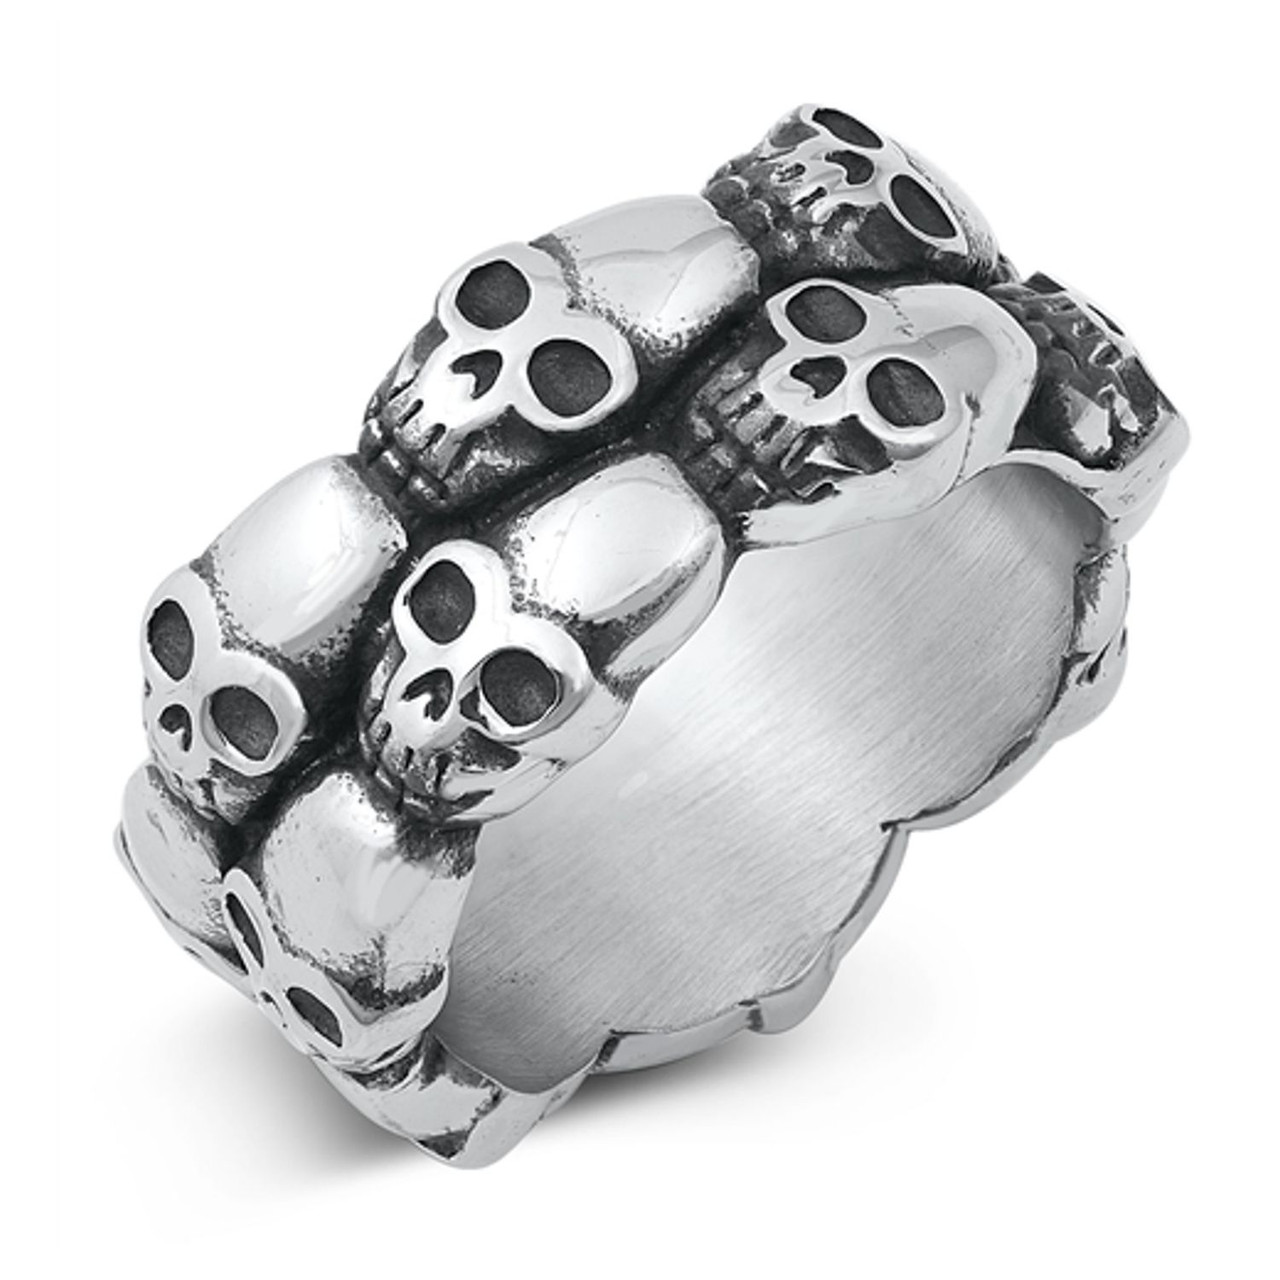 Skull Ring, Ring Collection - Cobalt Blue Steel Ring